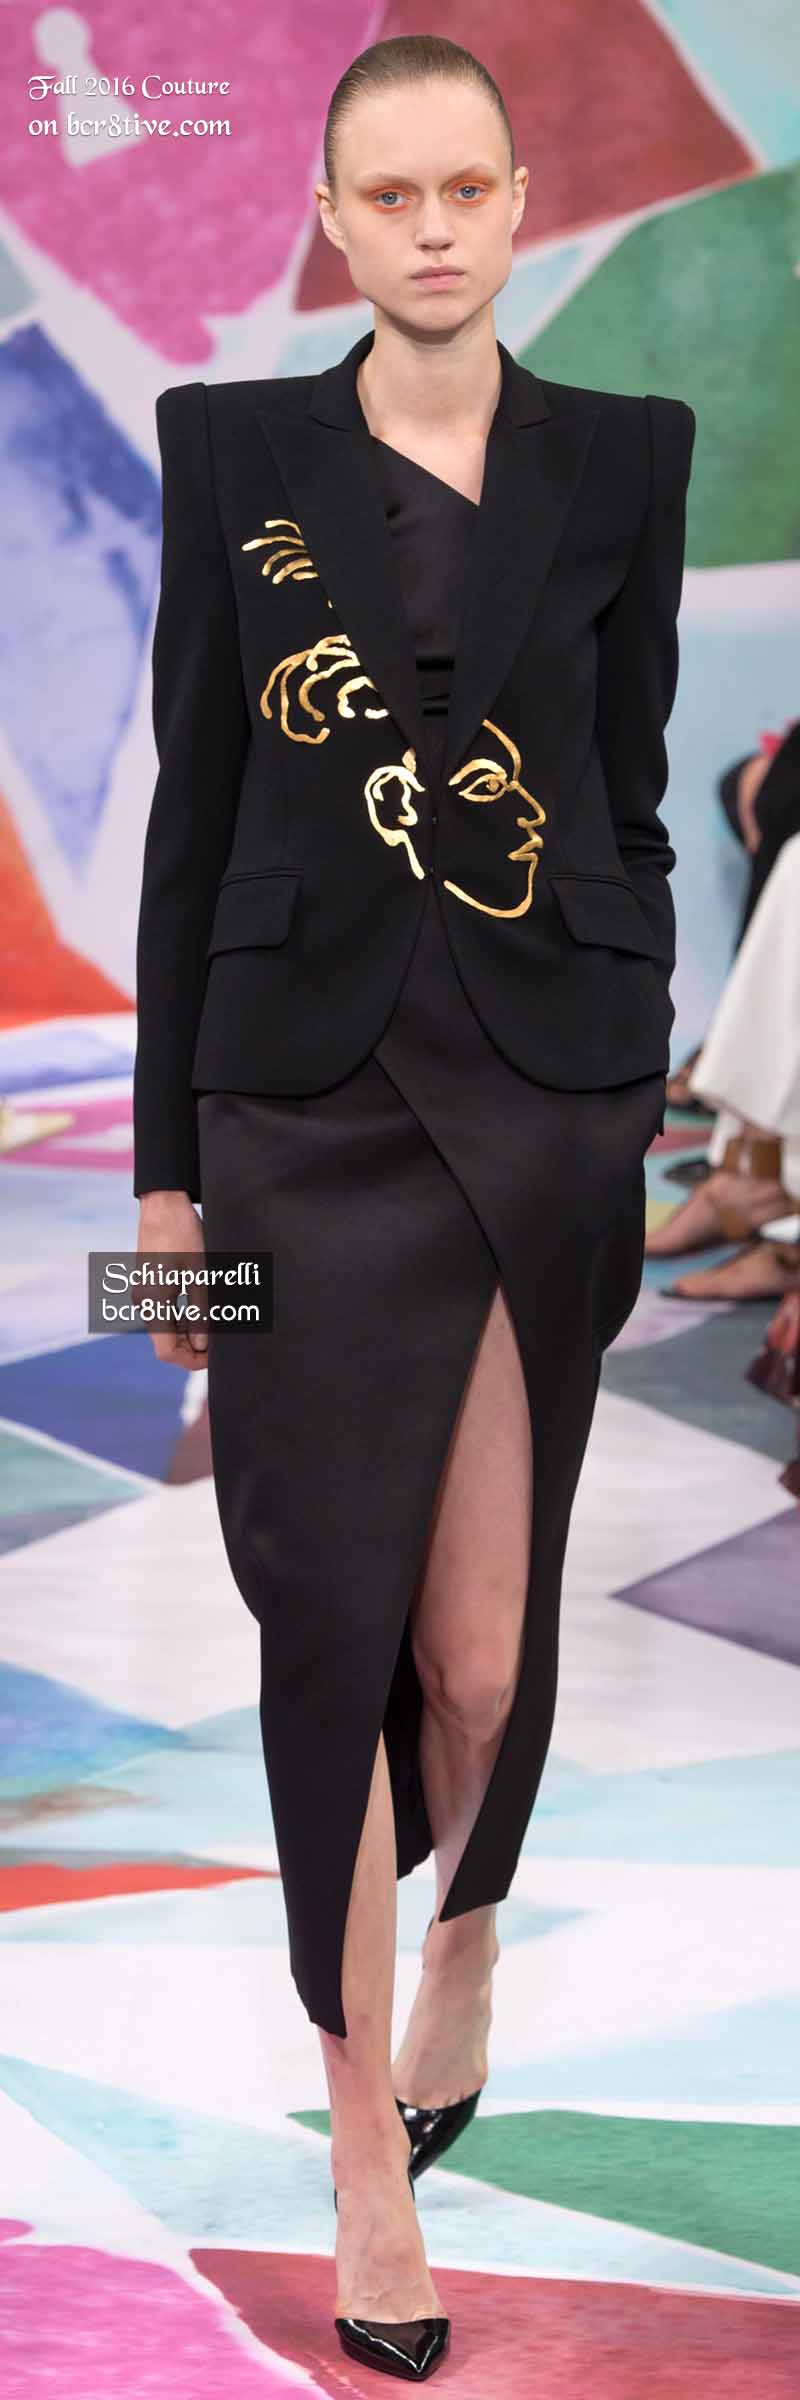 Schiaparelli - The Best Fall 2016 Haute Couture Fashion